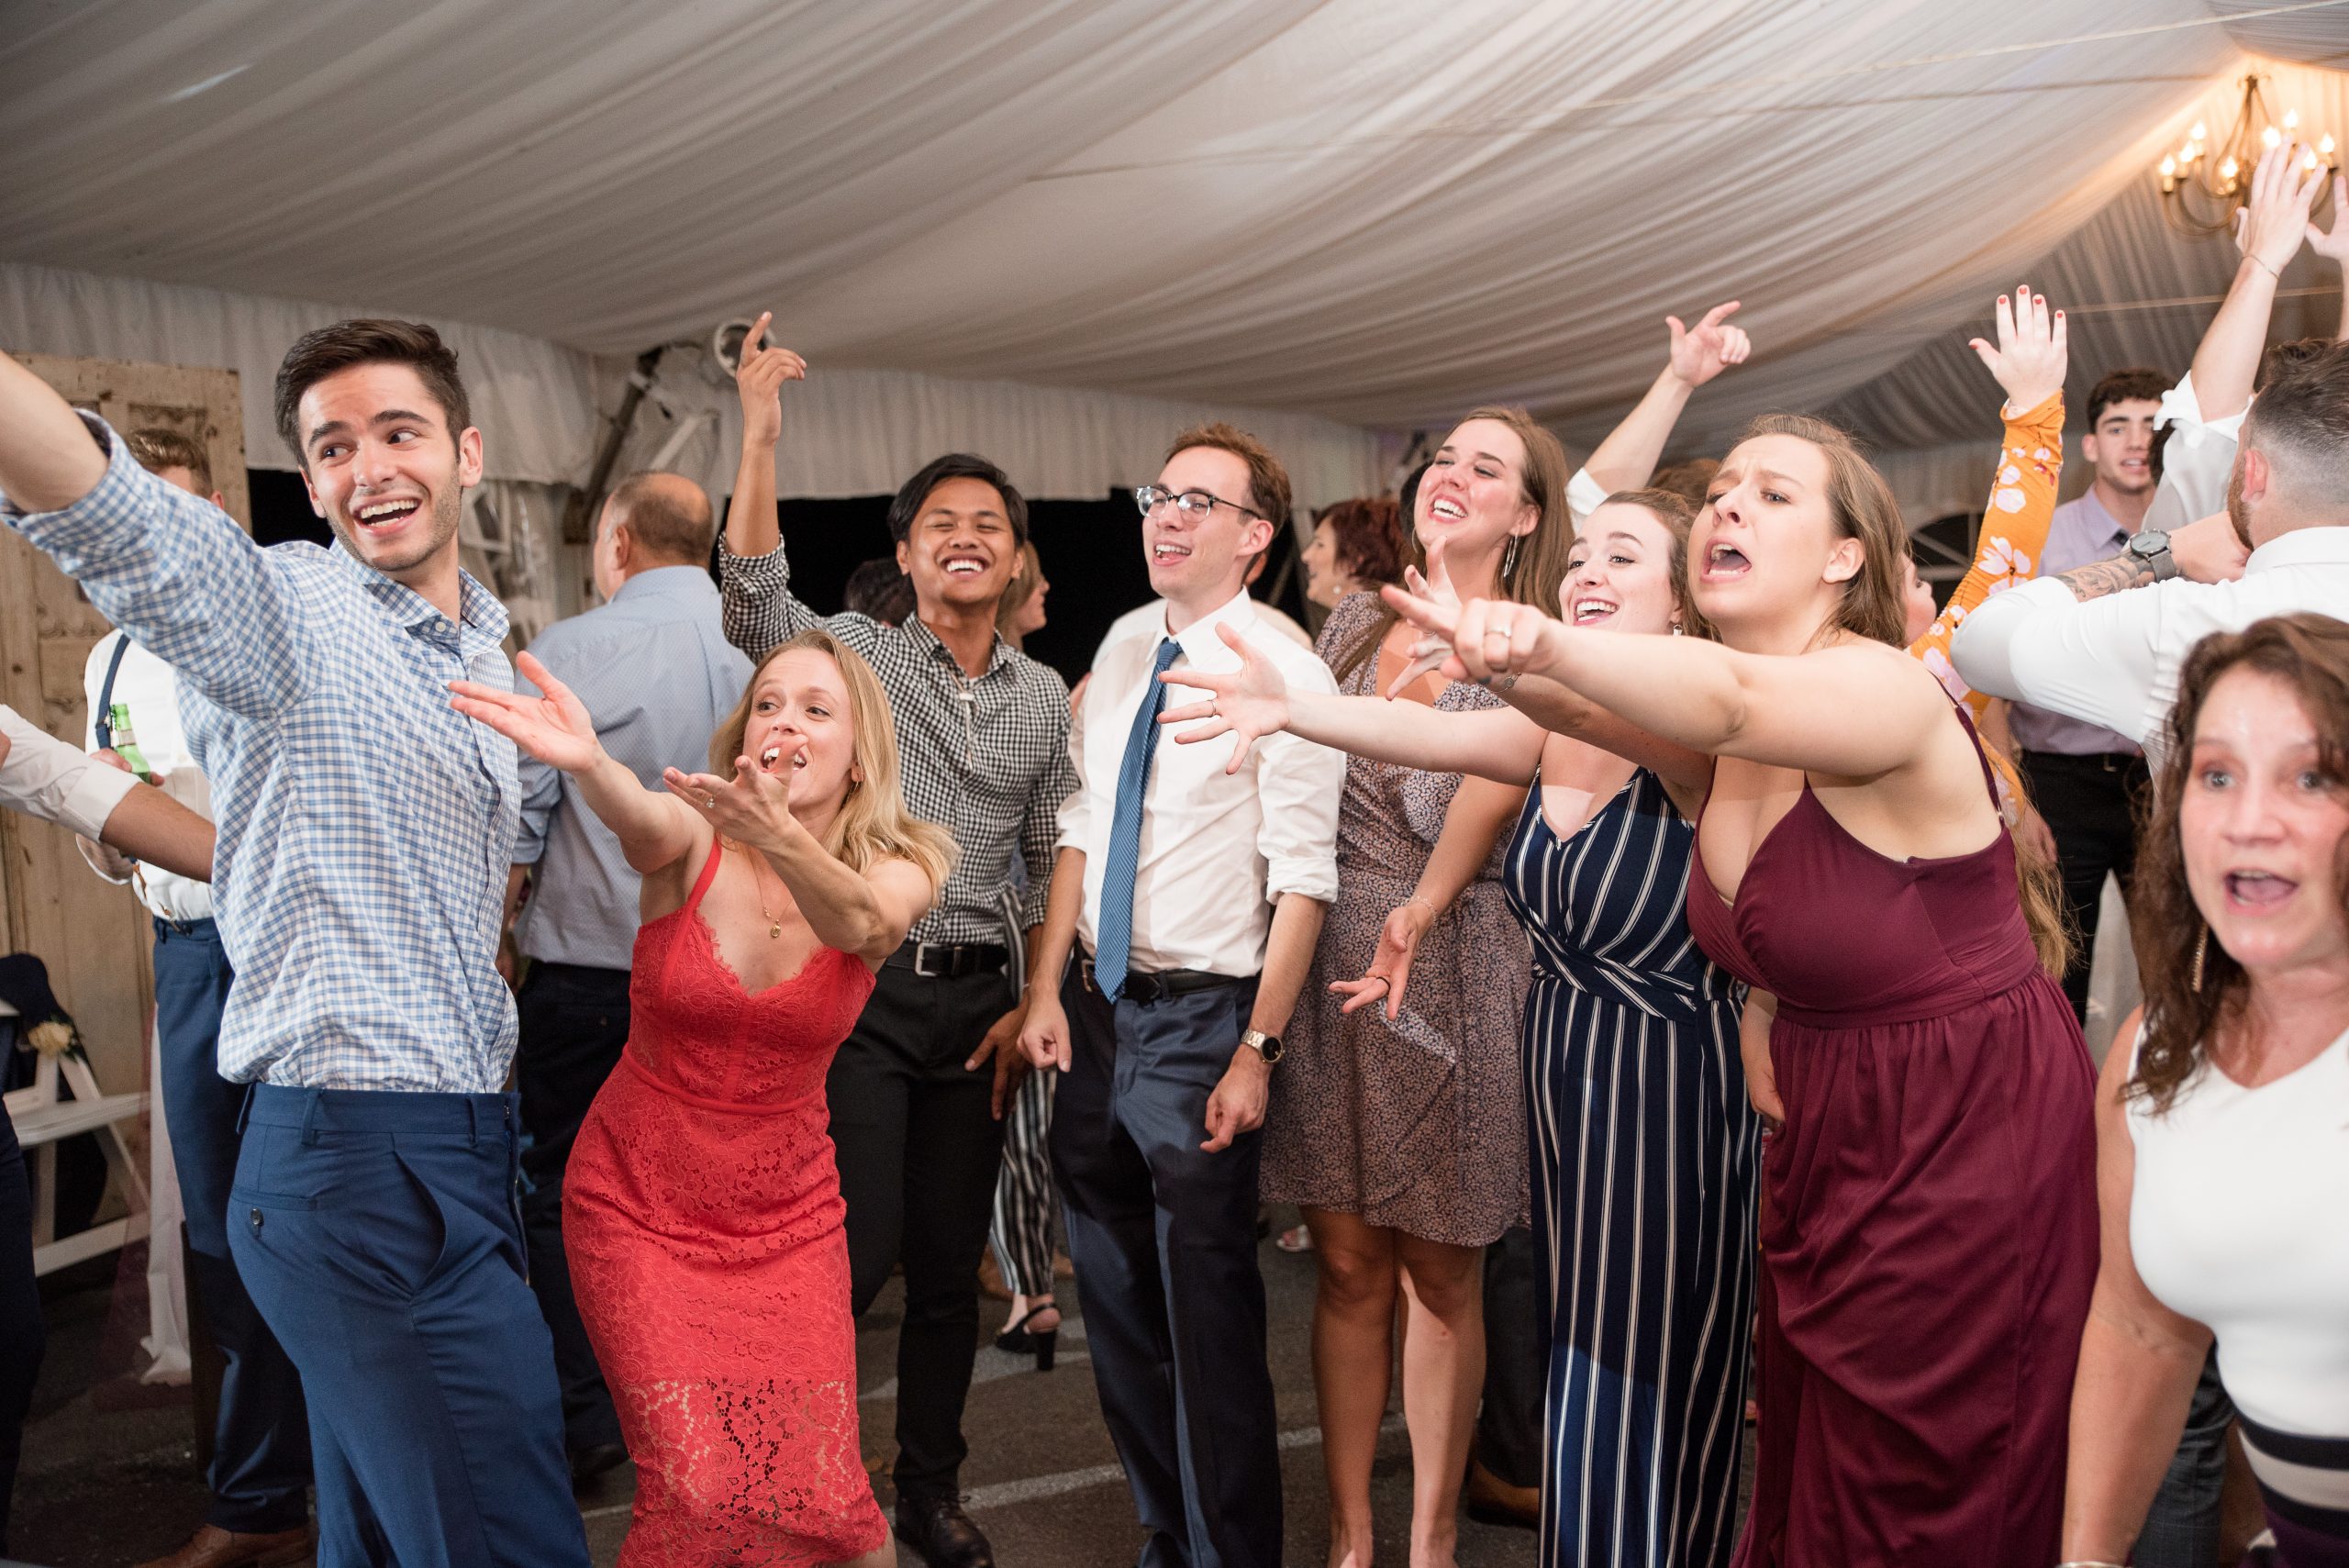 group dancing at wedding reception